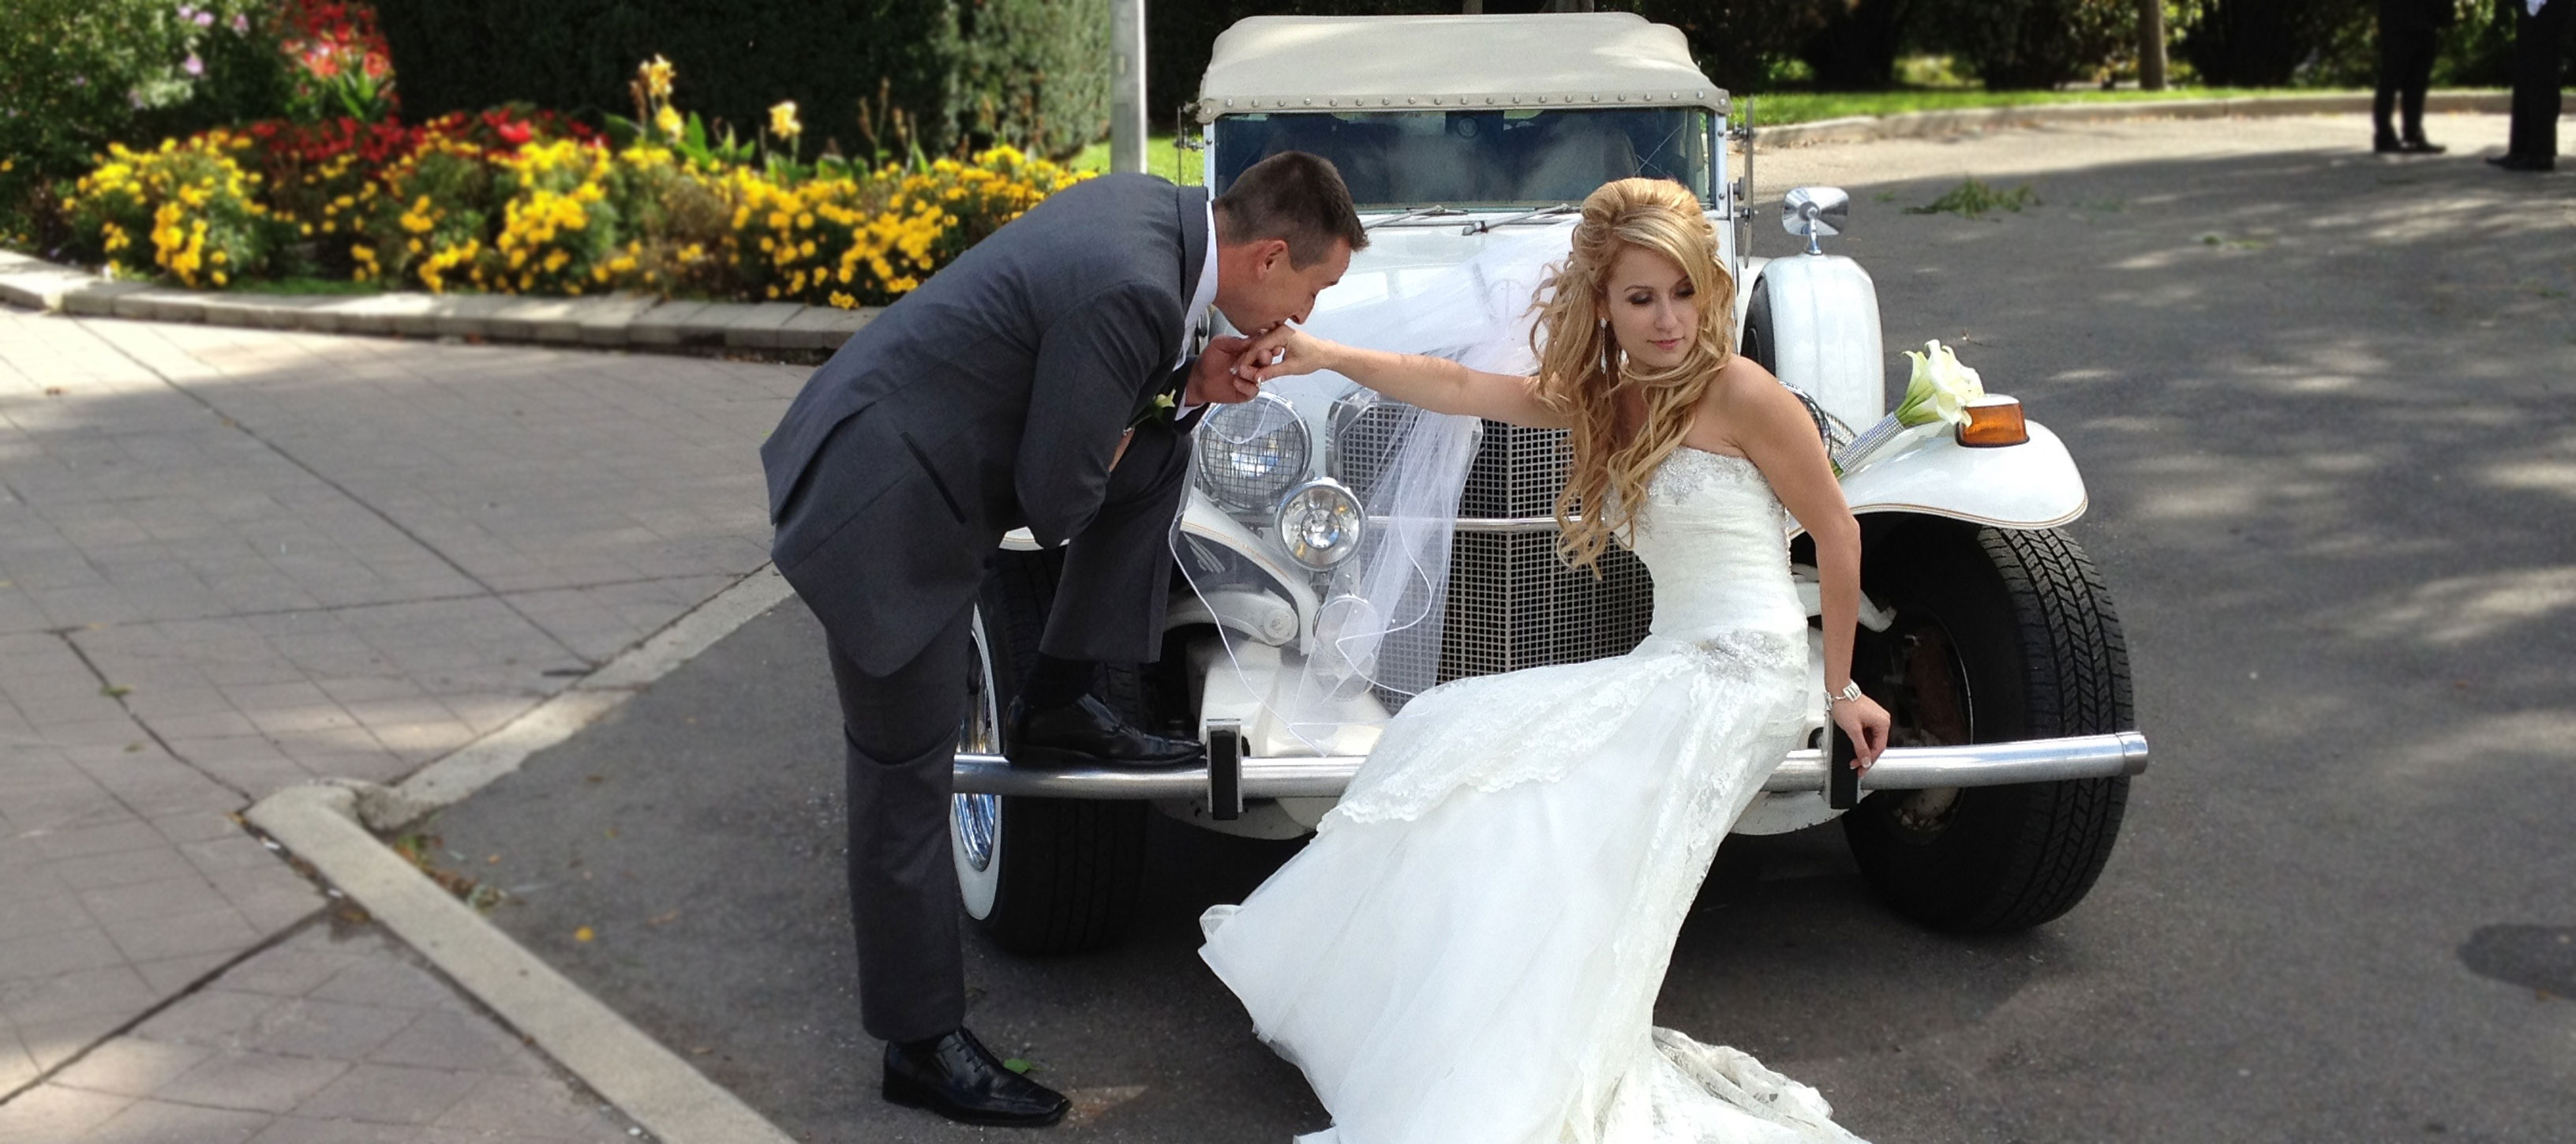 Toronto Wedding Limousines: Serving All of Ontario